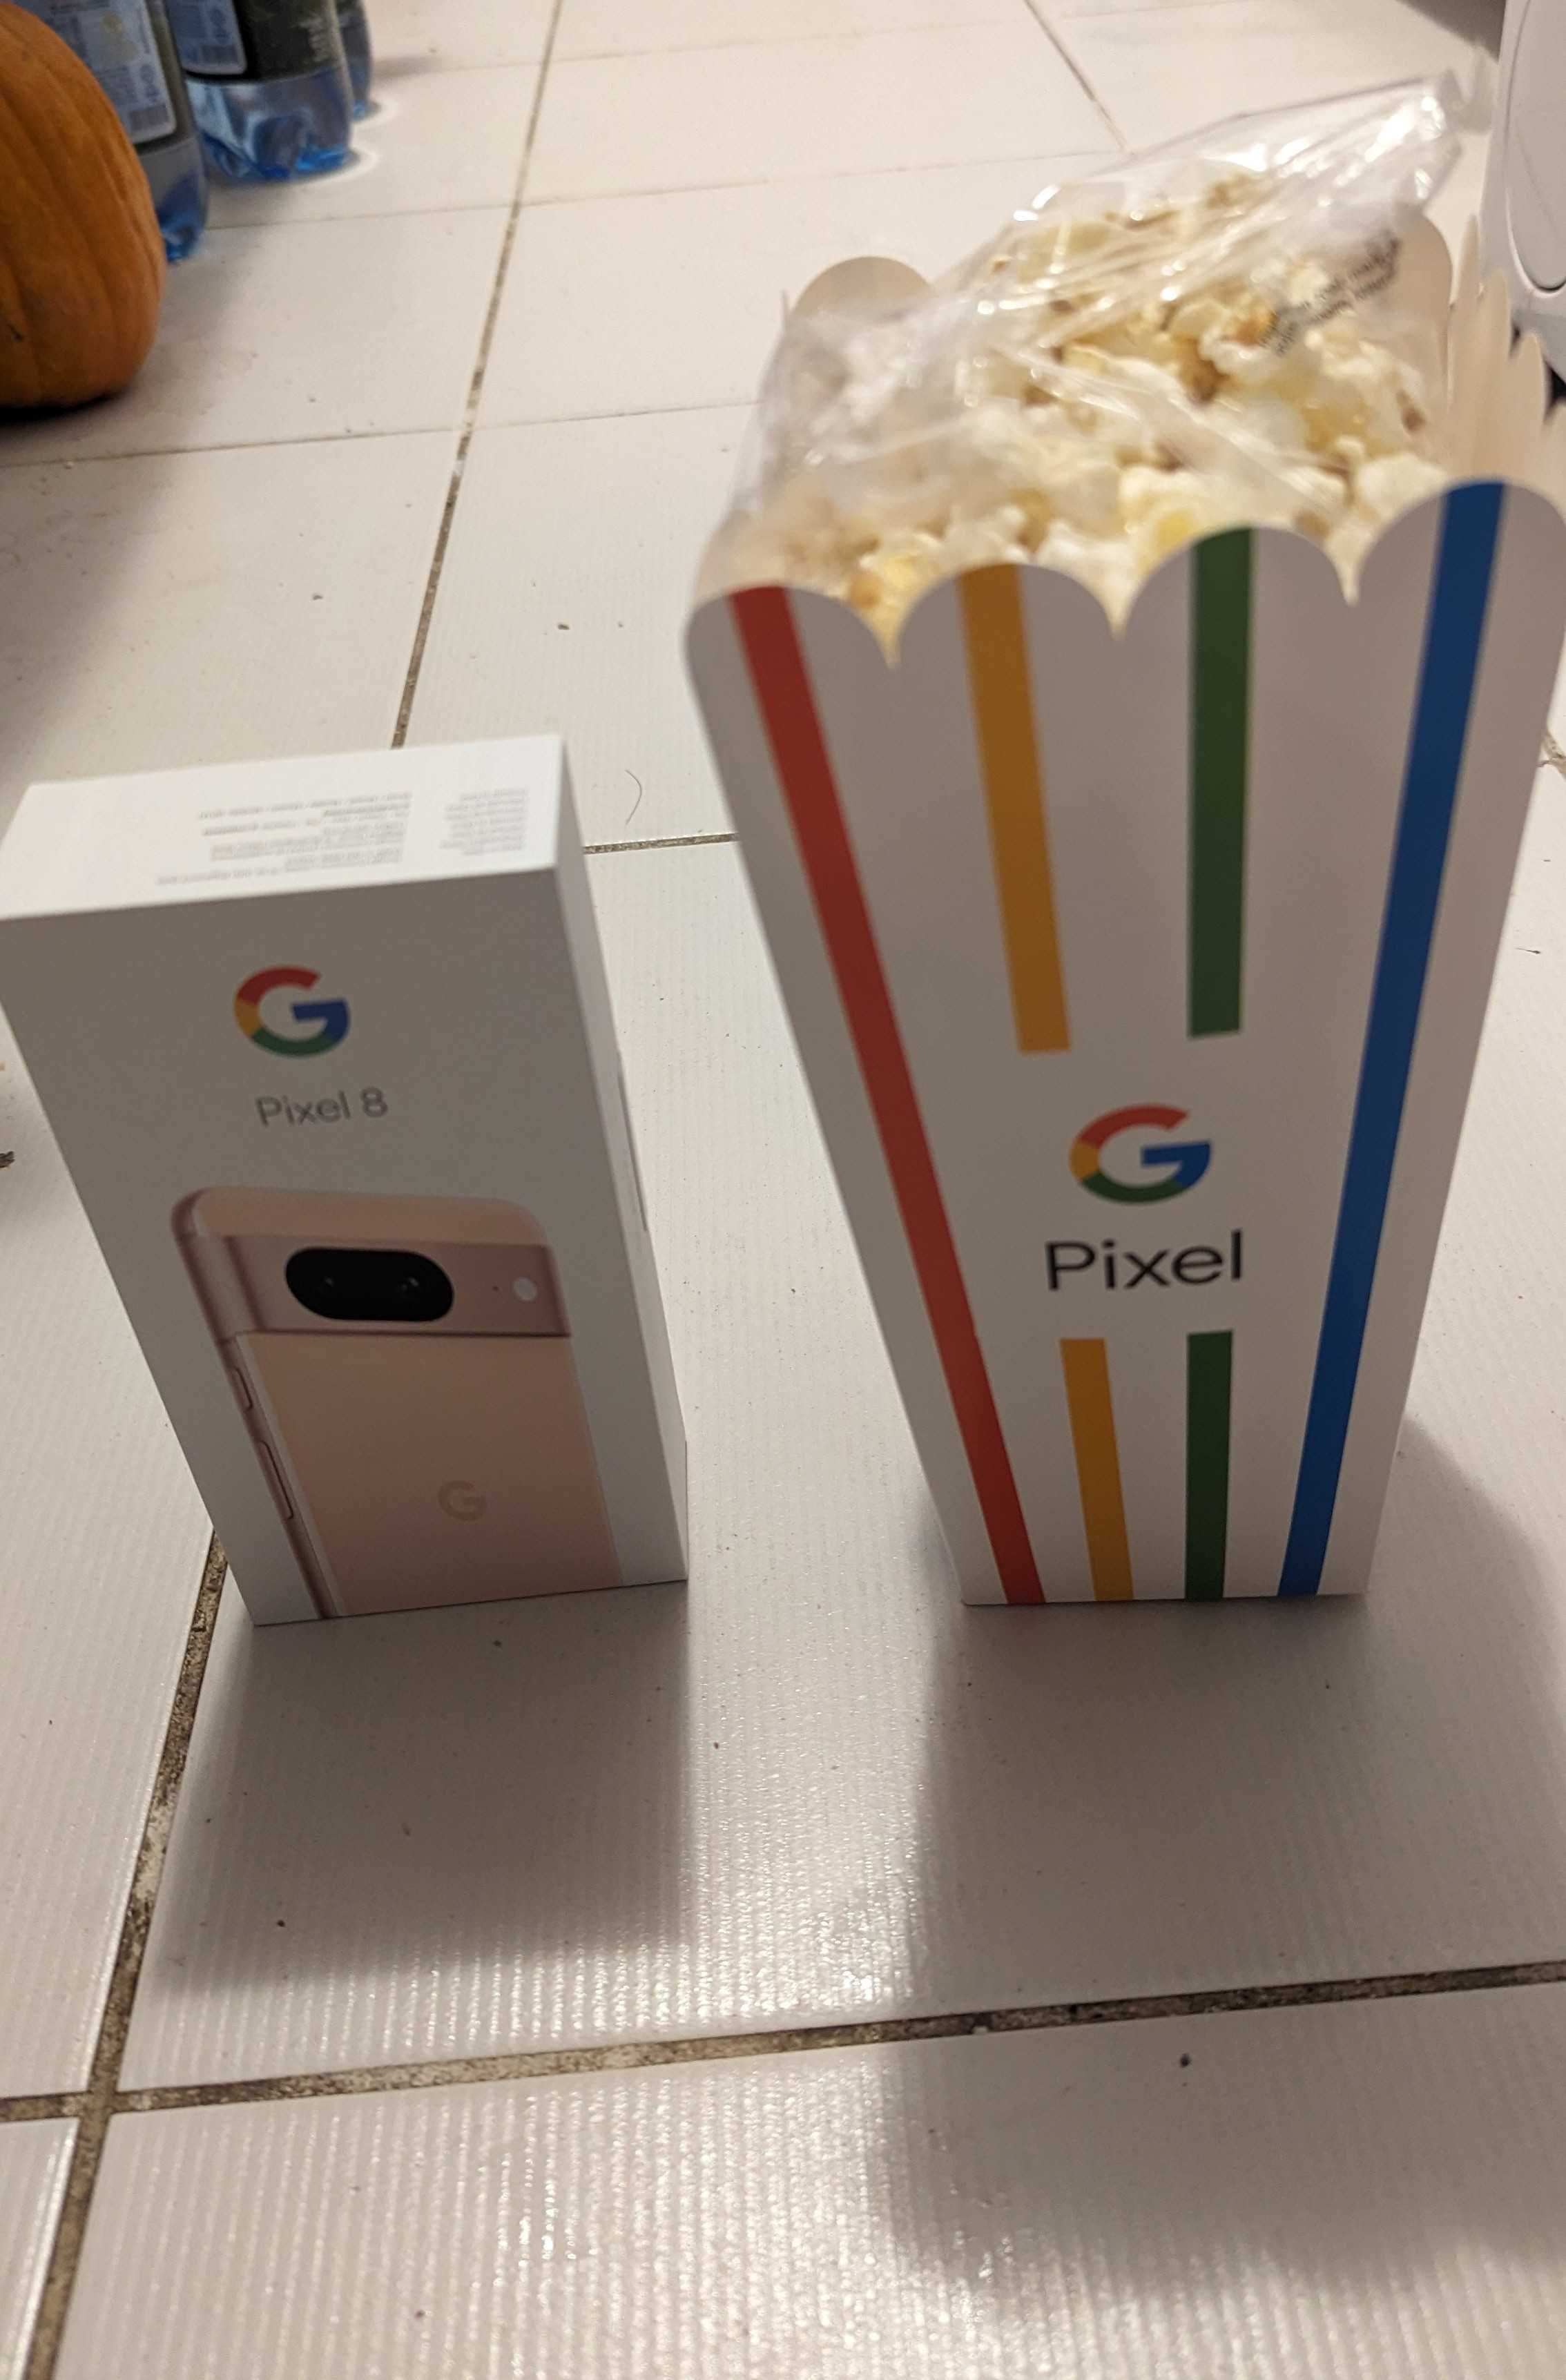 Telefon Google Pixel 8 sigilat, poti plati in rate